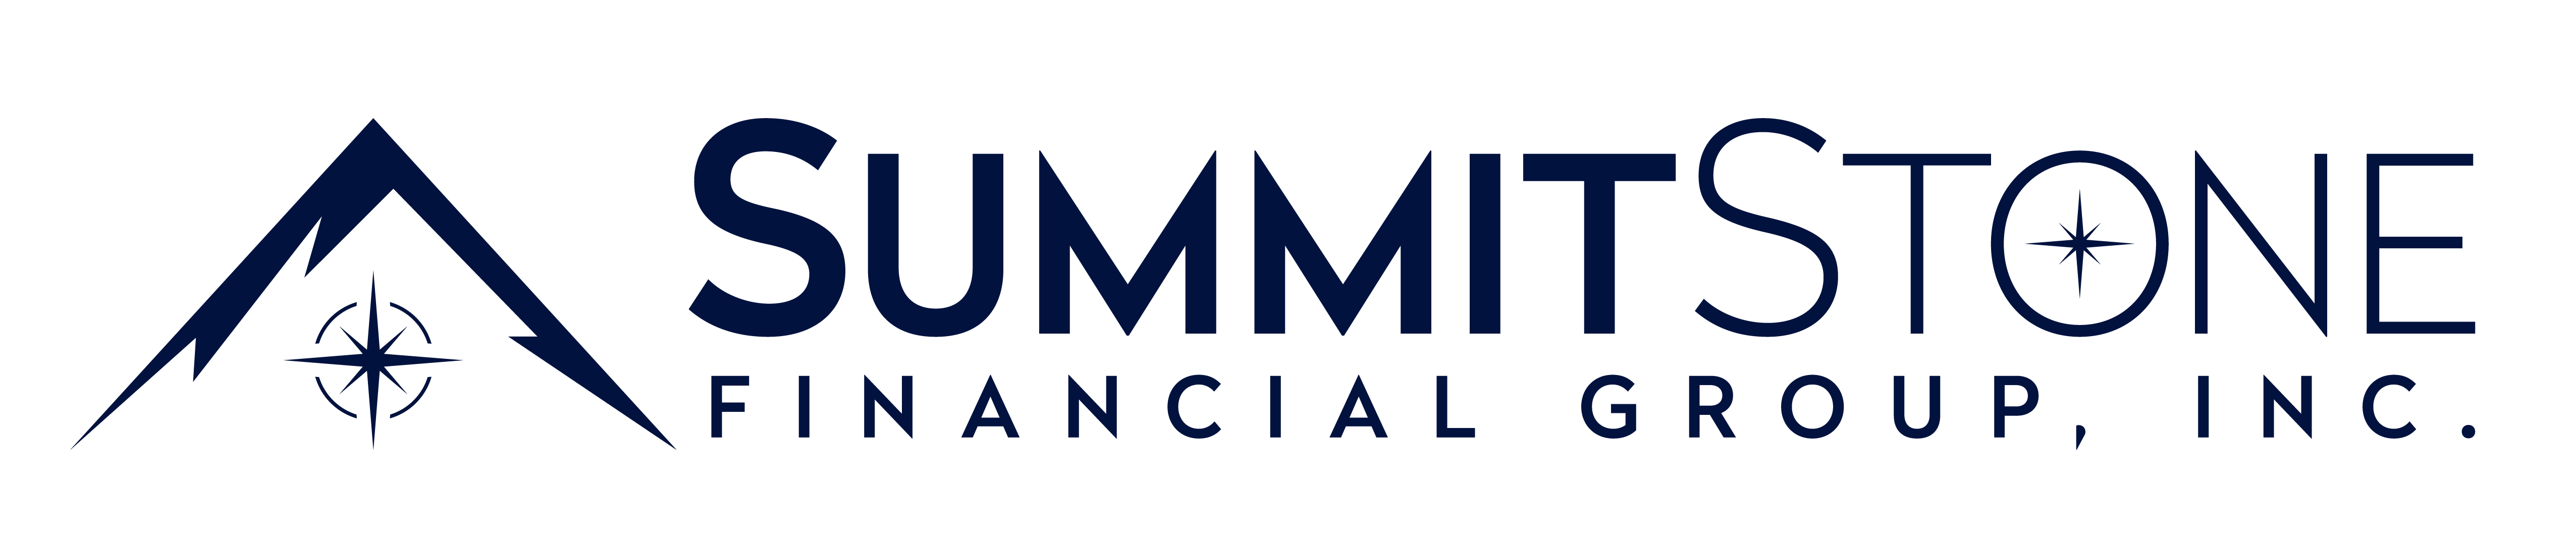 Summitstone Financial Group, Inc